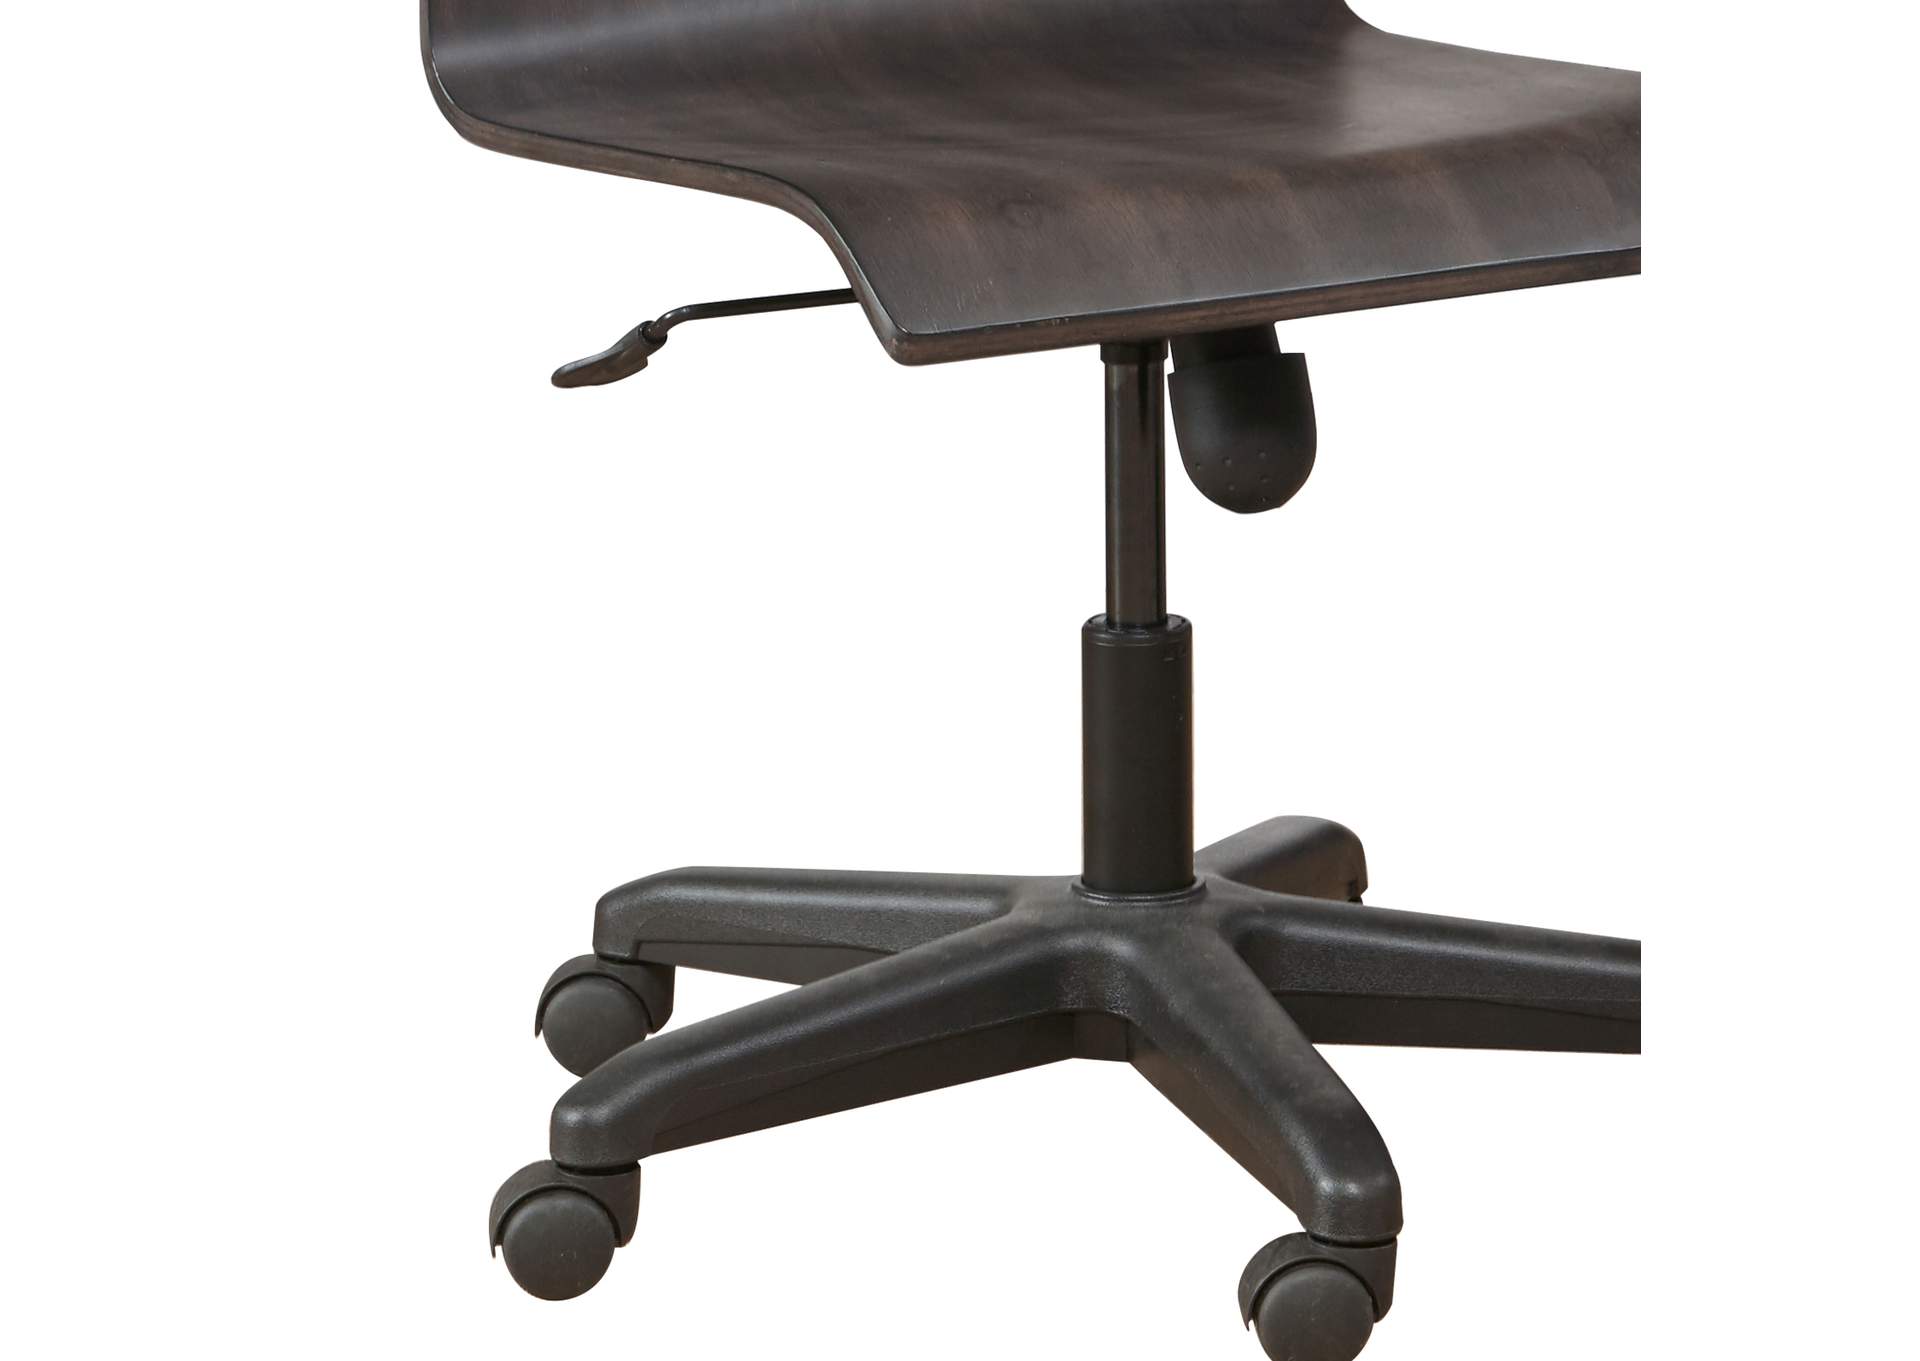 Youth Bedroom Desk Chair in Espresso Brown,Pulaski Furniture